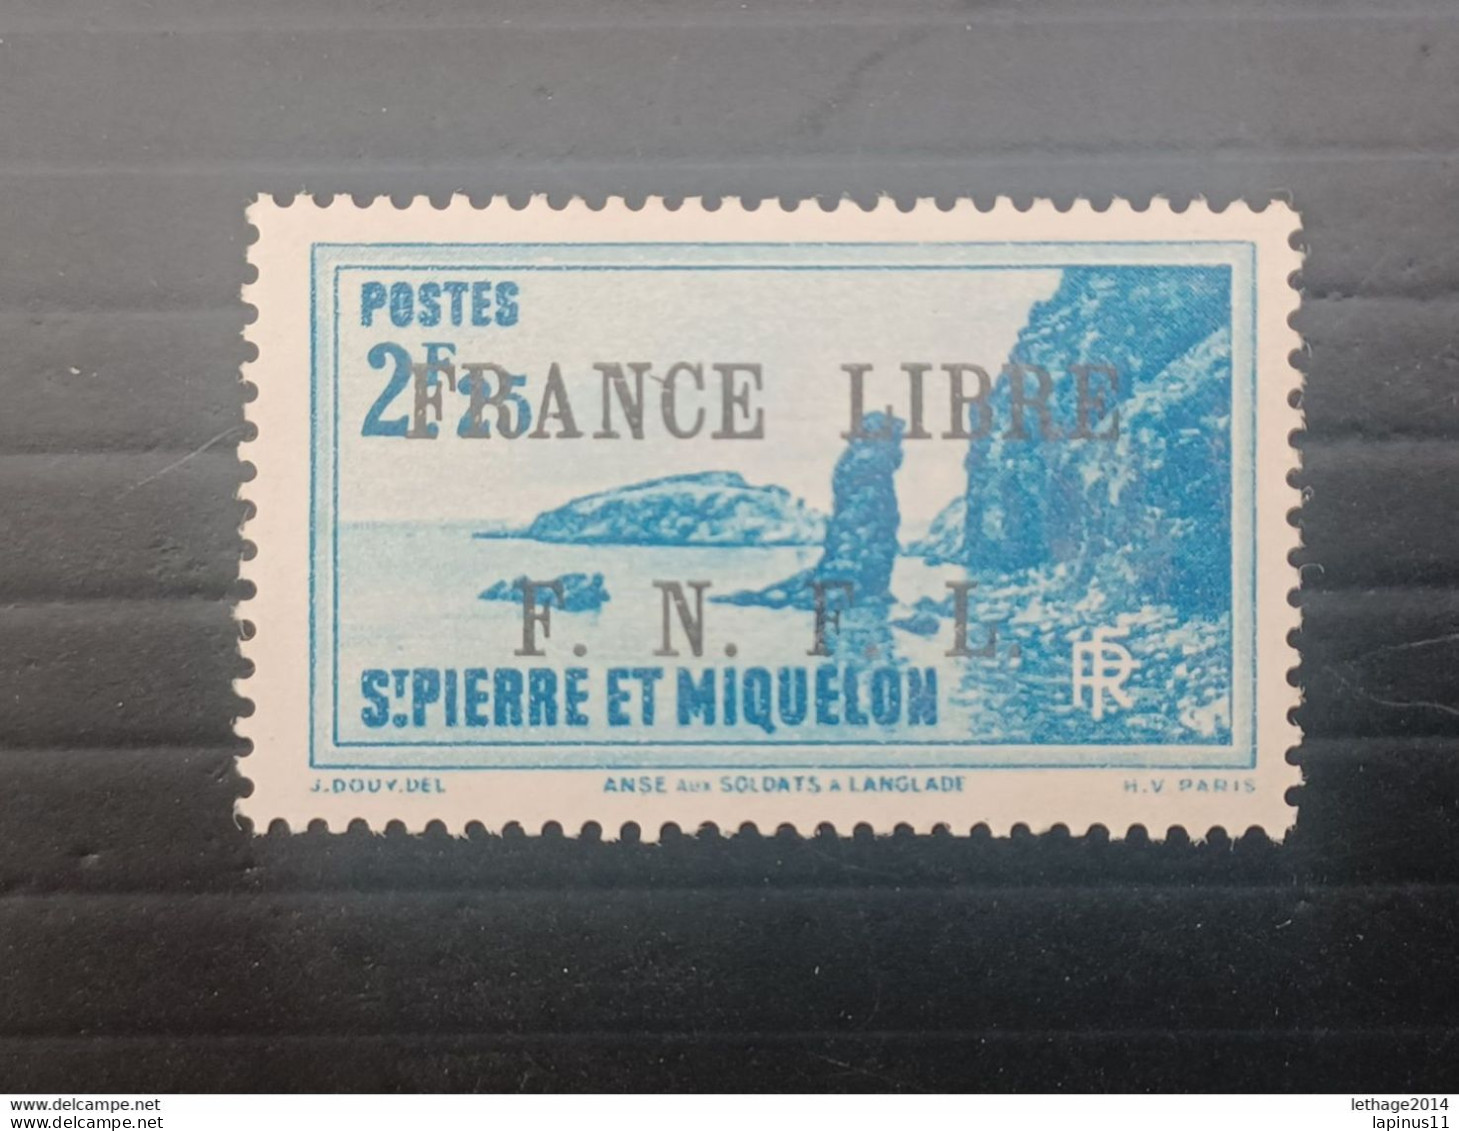 ST PIERRE ET MIQUELLON 1941 STAMPS OF 1922 OVERPRINT FRANCE LIBRE F N F L CAT. YVERT N. 269 MNG - Neufs